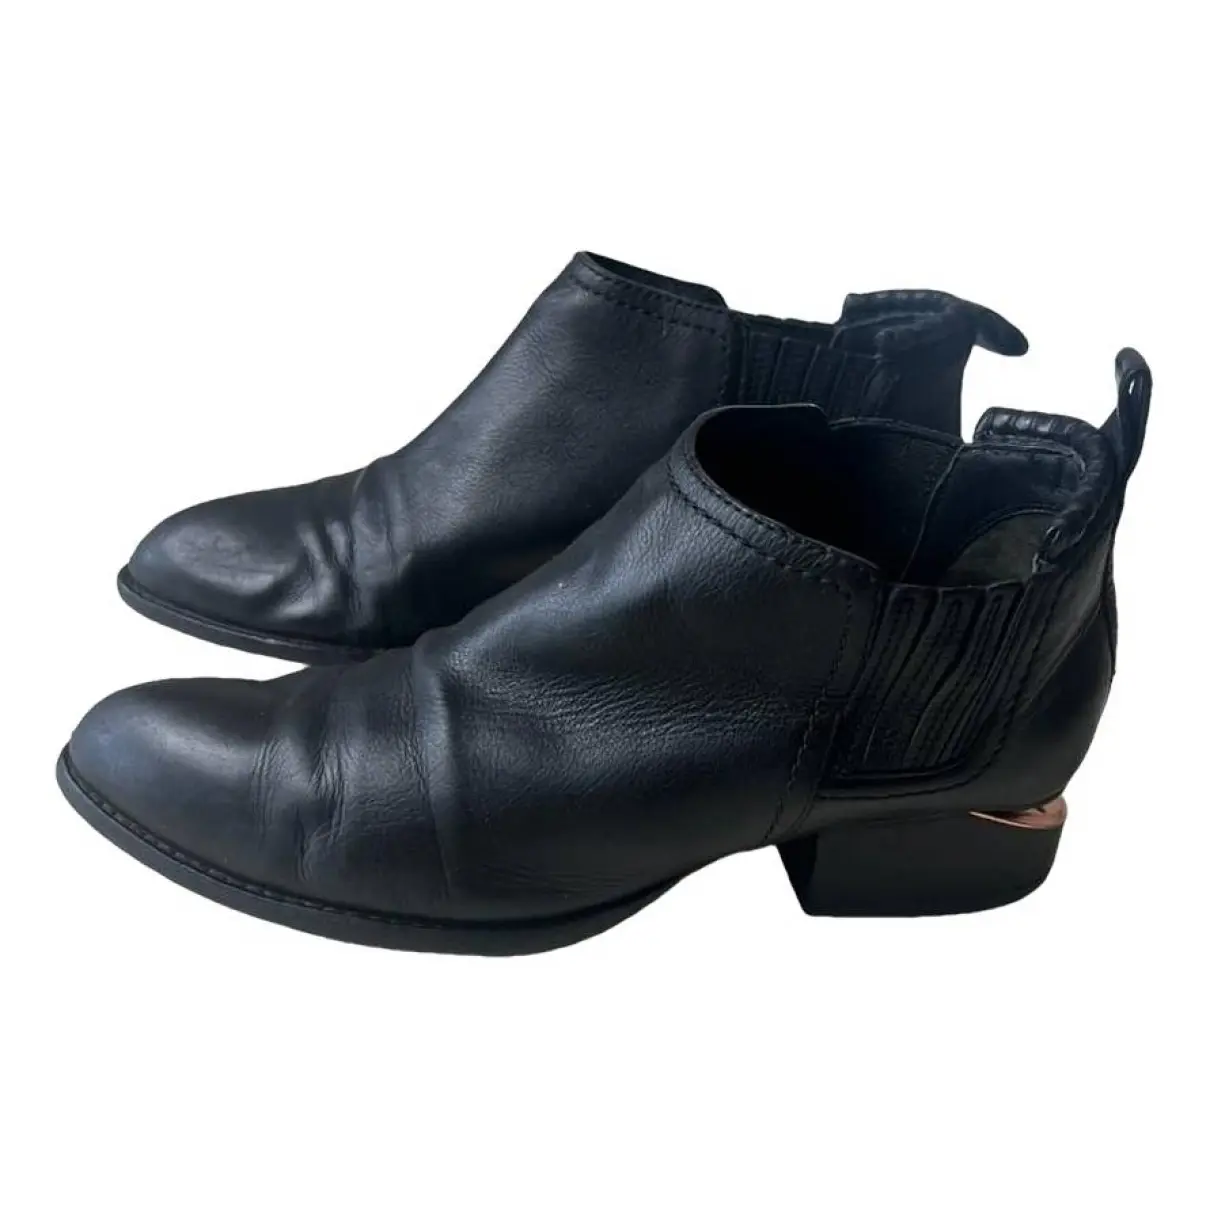 Kori leather boots